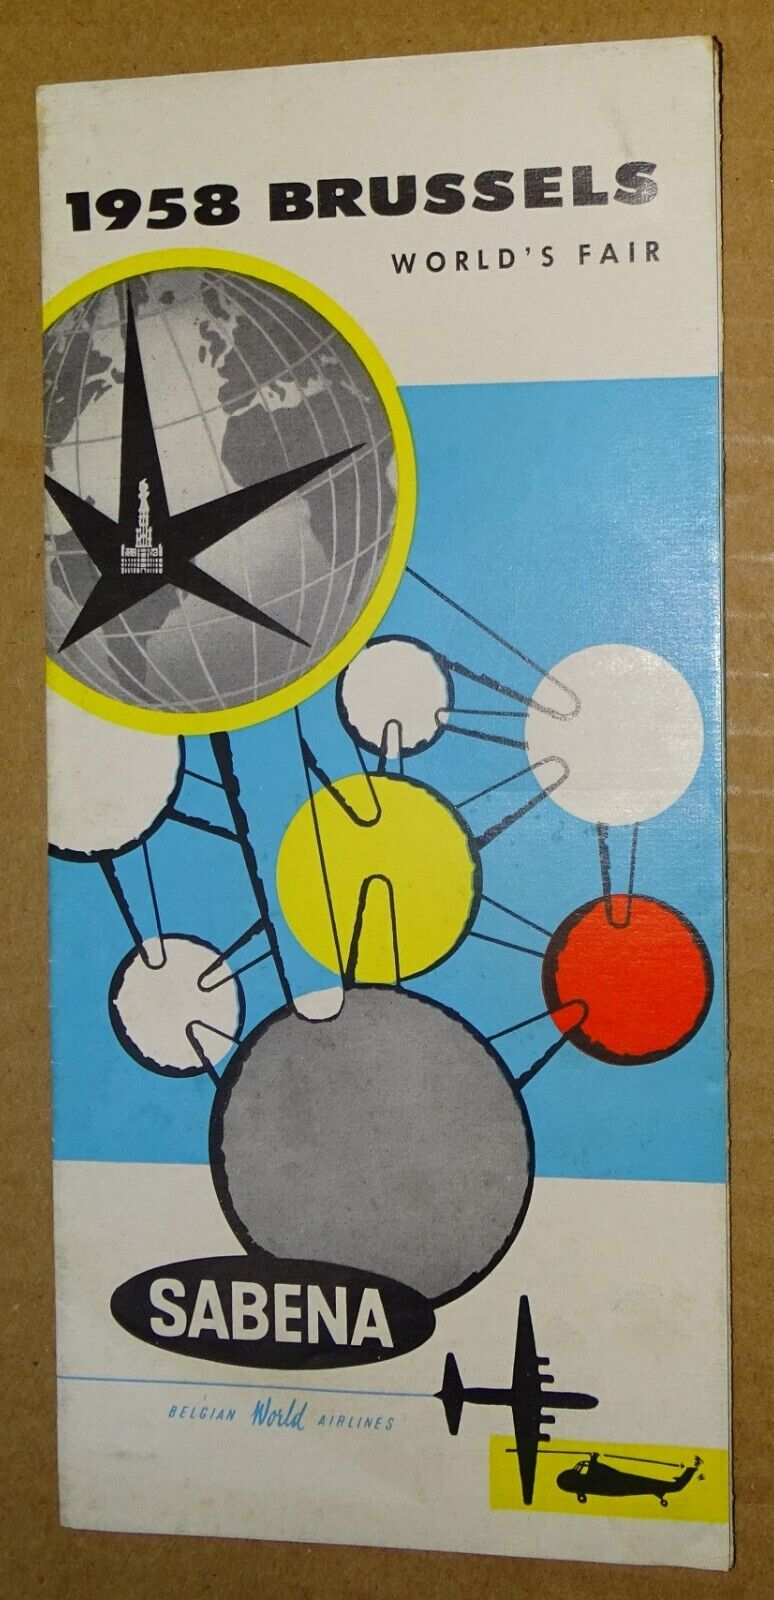 1958 Brussels World's Fair Sabena Belgian World Airlines Brochure